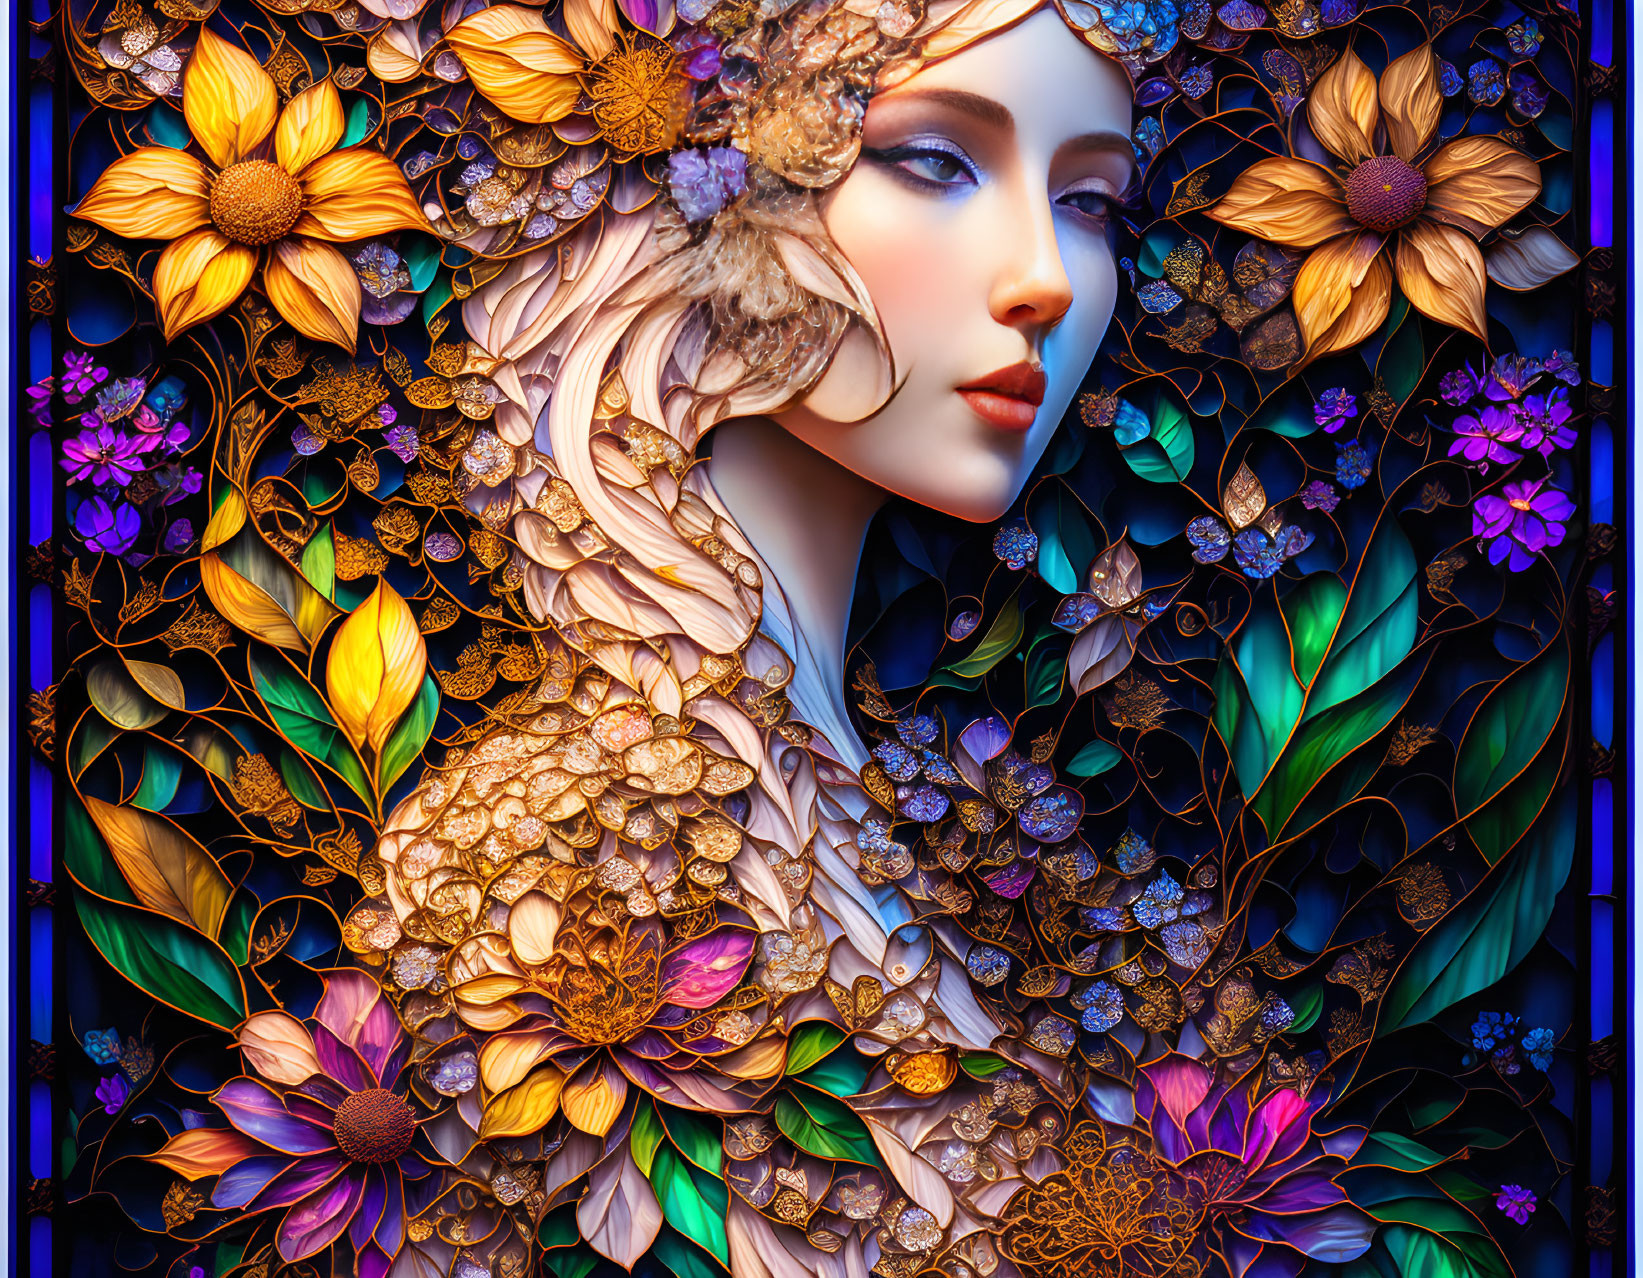 Digital Art: Woman's Profile with Golden Floral Mane on Blue Background